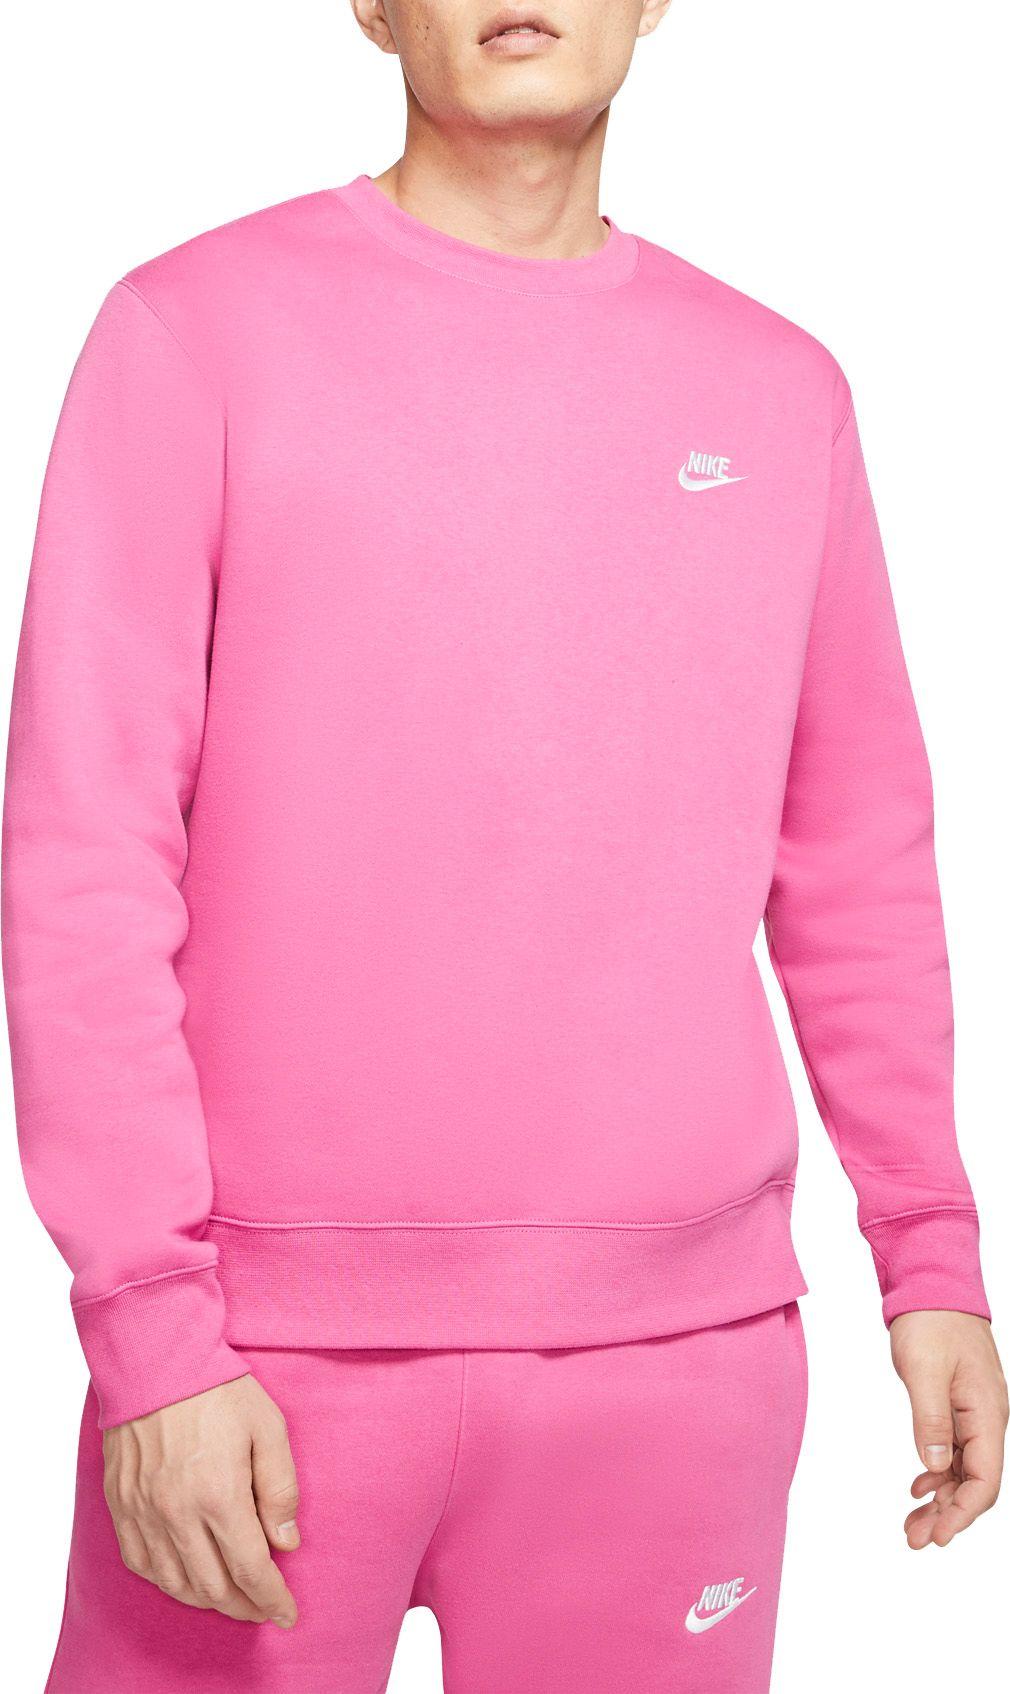 mens pink nike sweater